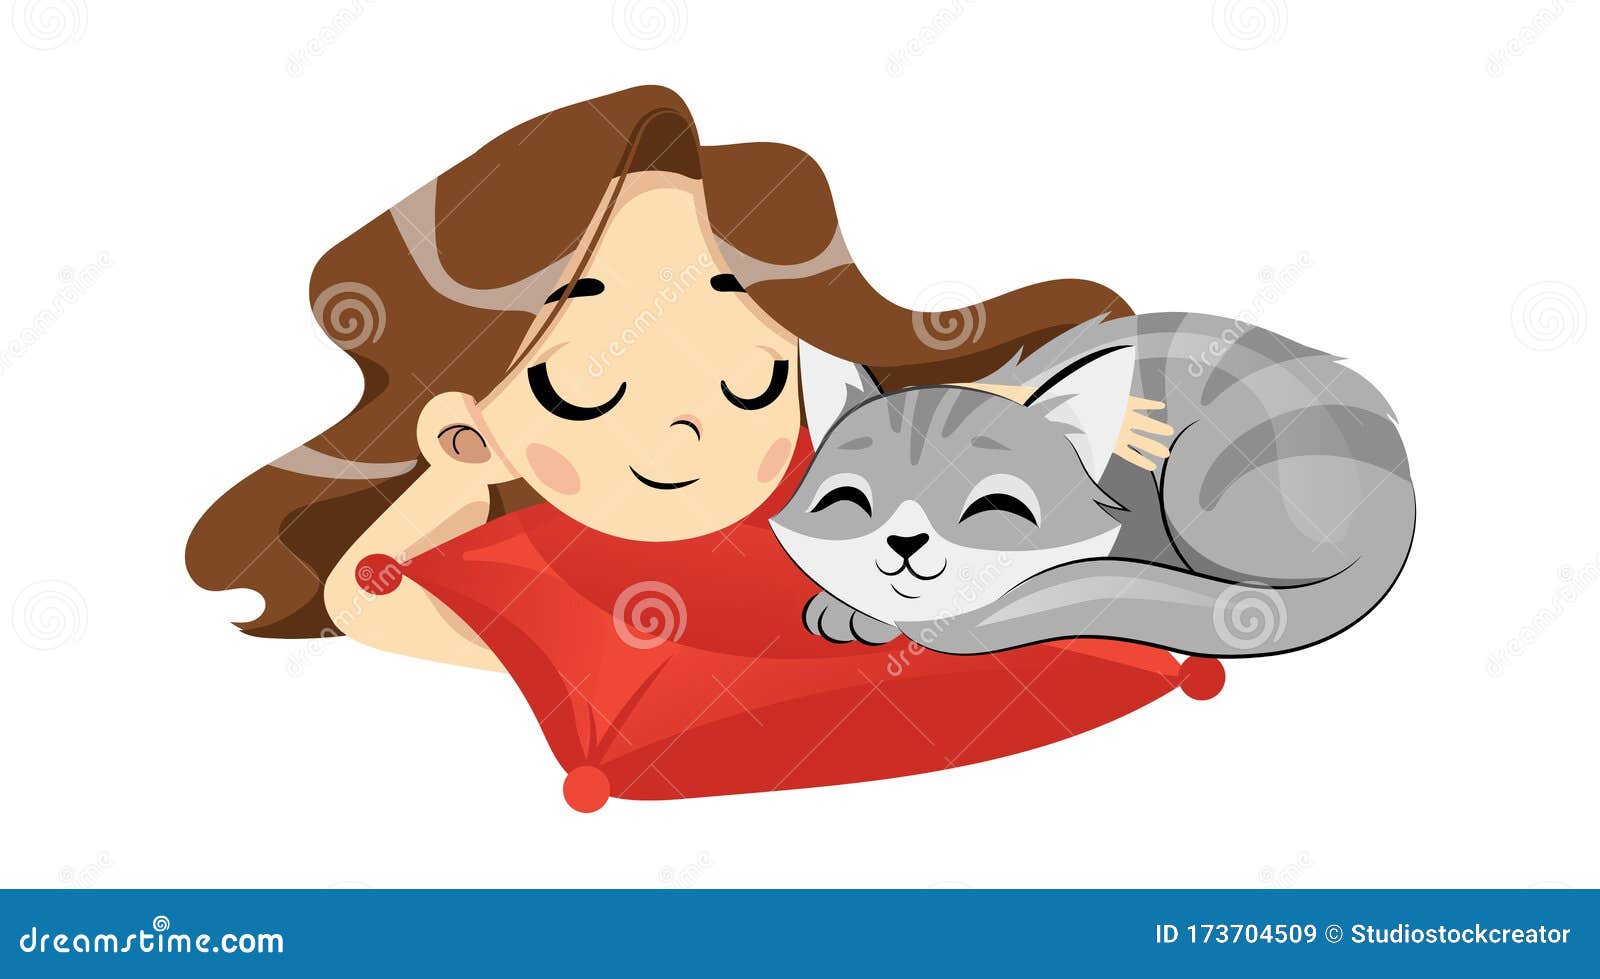 Animal Shelter, Animal Adoption, Care, Homeless Help Concept. Little Girl  Child Embraces the Cat Isolated on White Stock Vector - Illustration of  life, homeless: 173704509